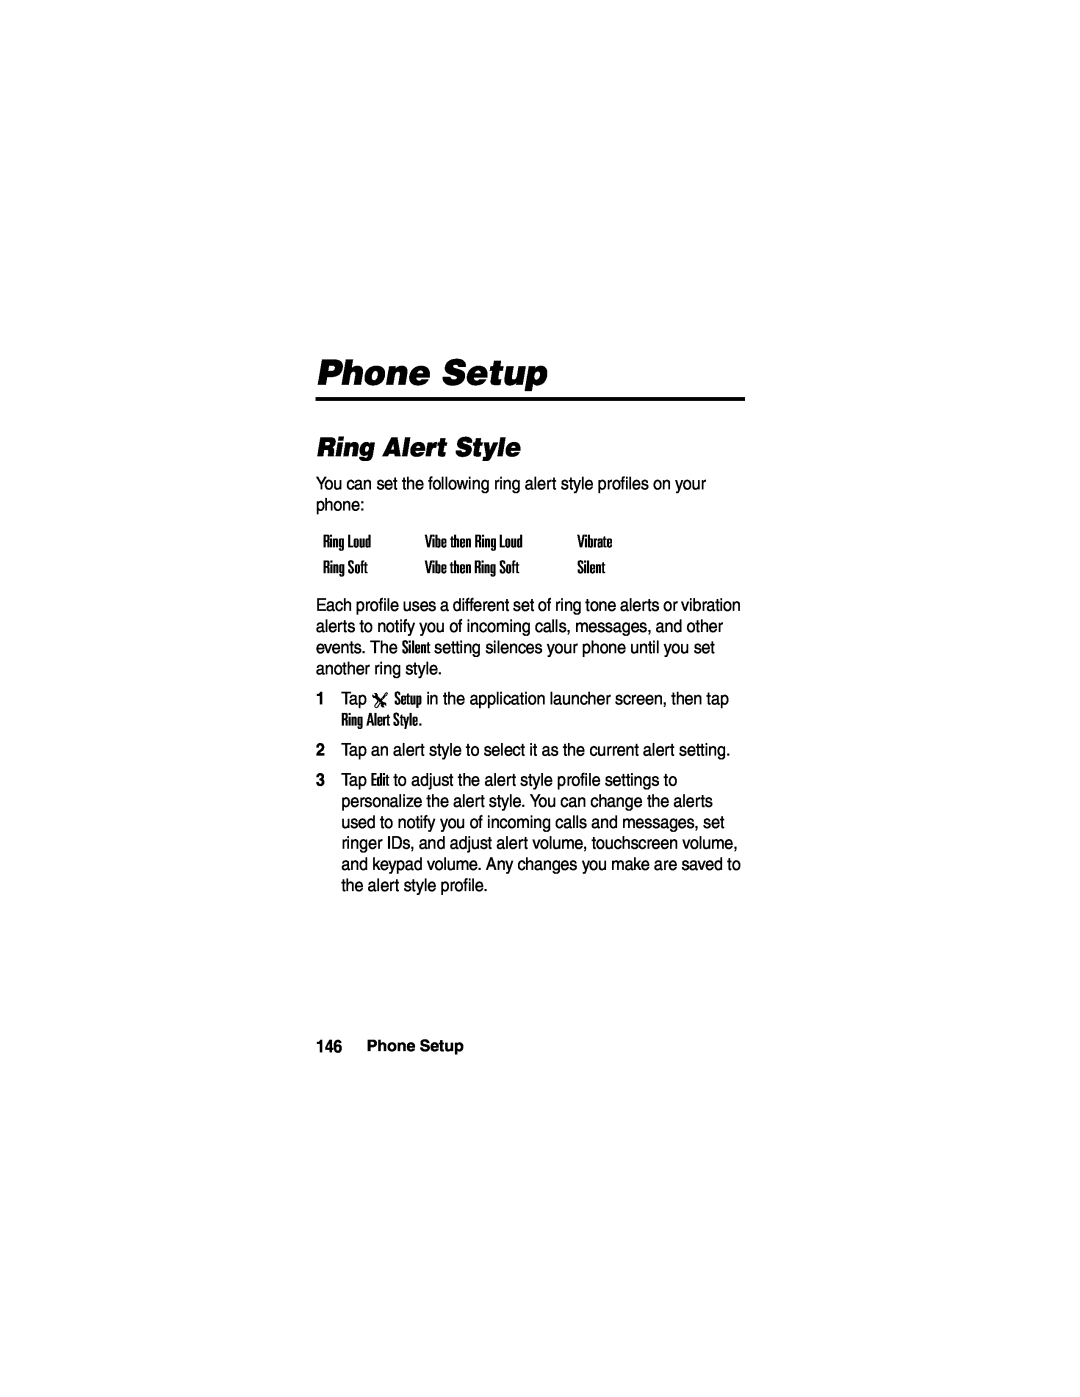 Motorola A780 manual Phone Setup, Ring Alert Style 